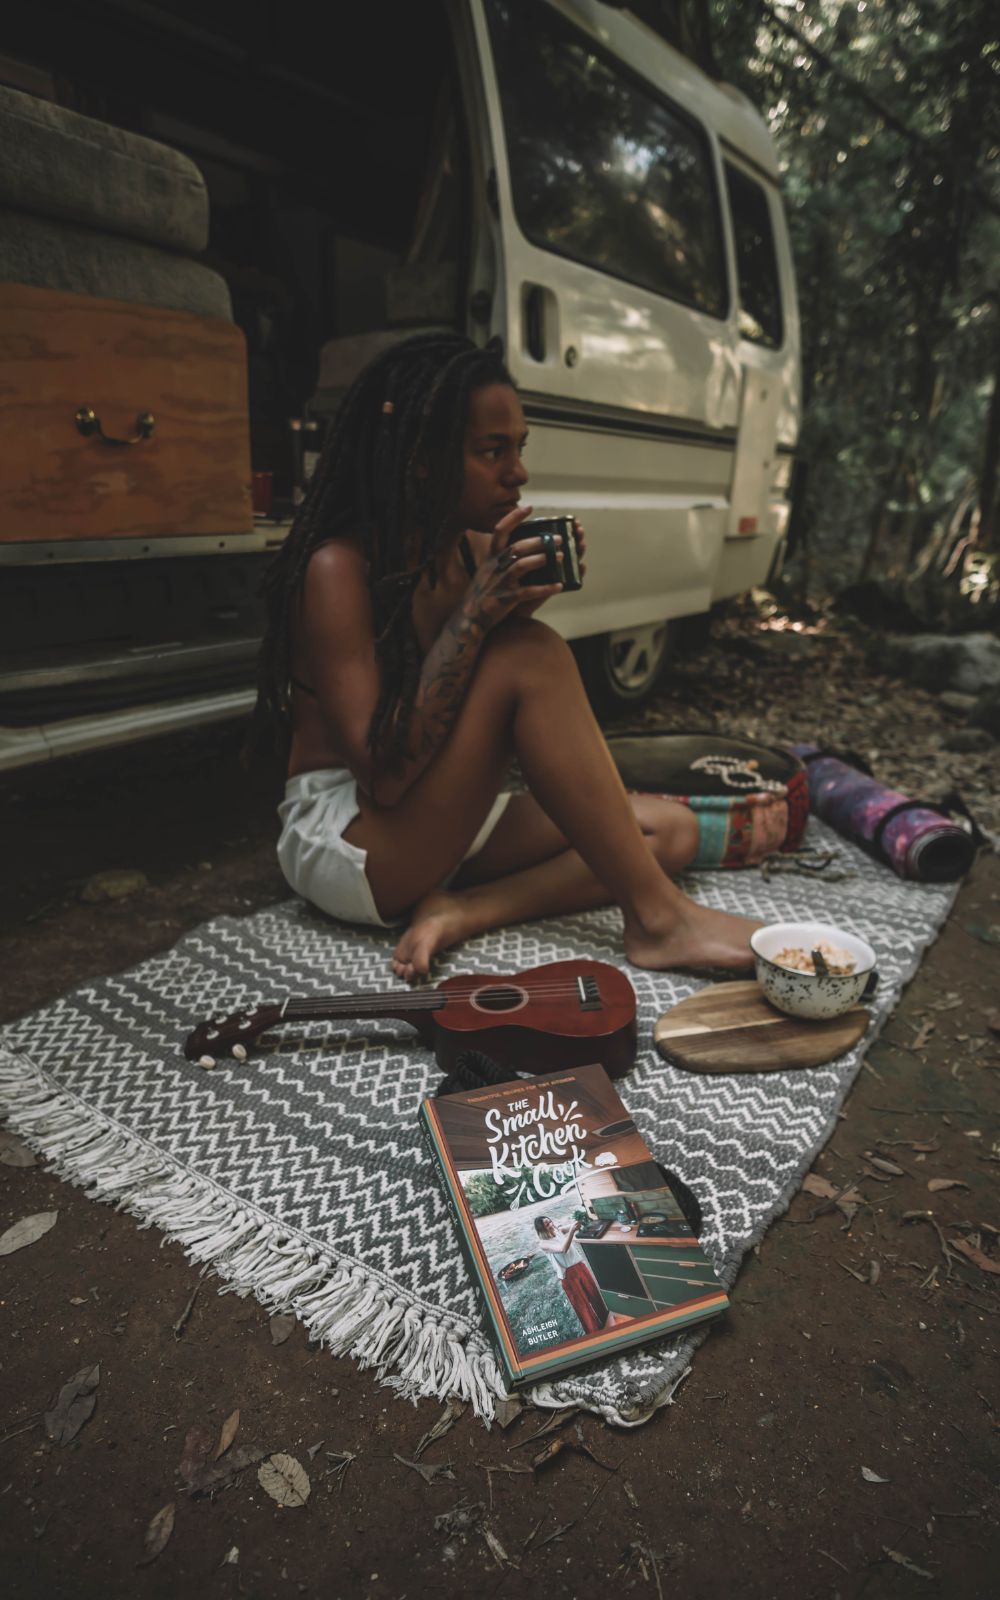 Wildly Sonia Footer Instagram photos slow travel, van life, digital nomad